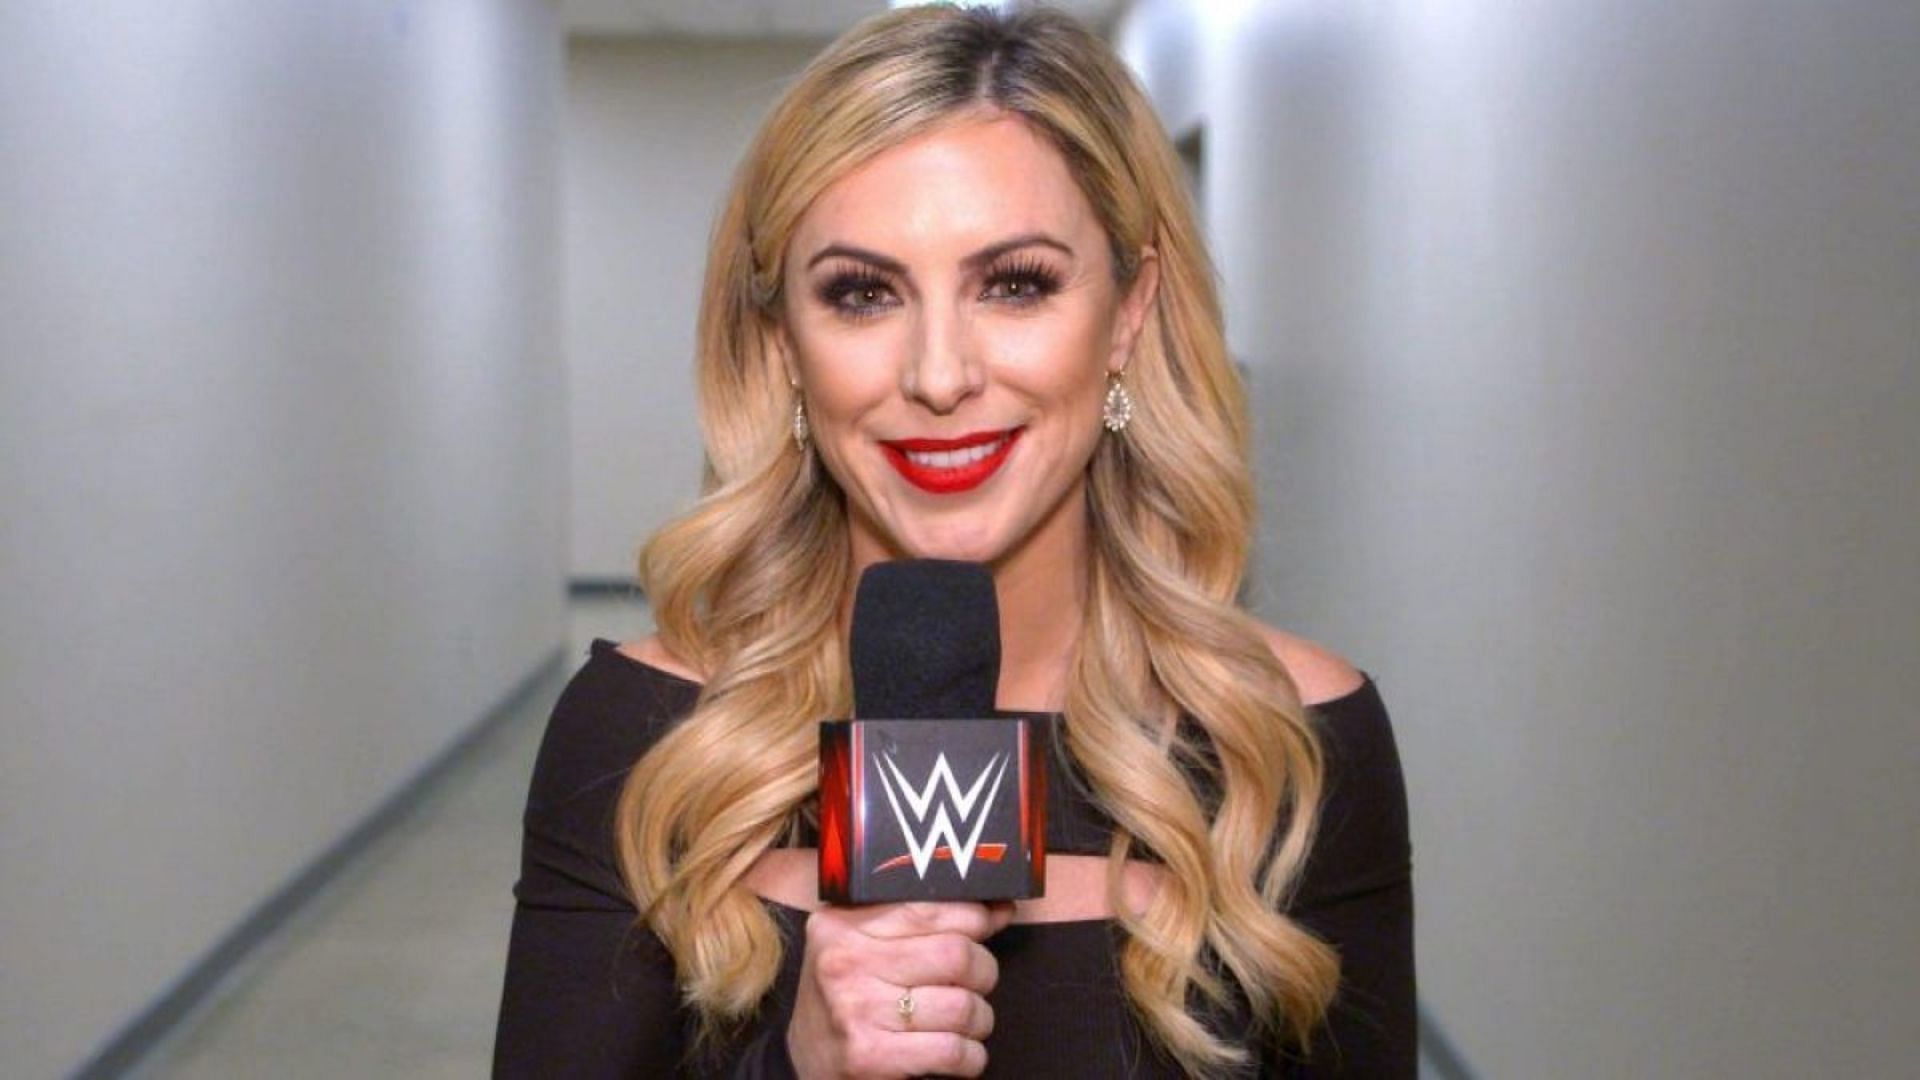 Sarah Schreiber has been working for WWE since 2018.